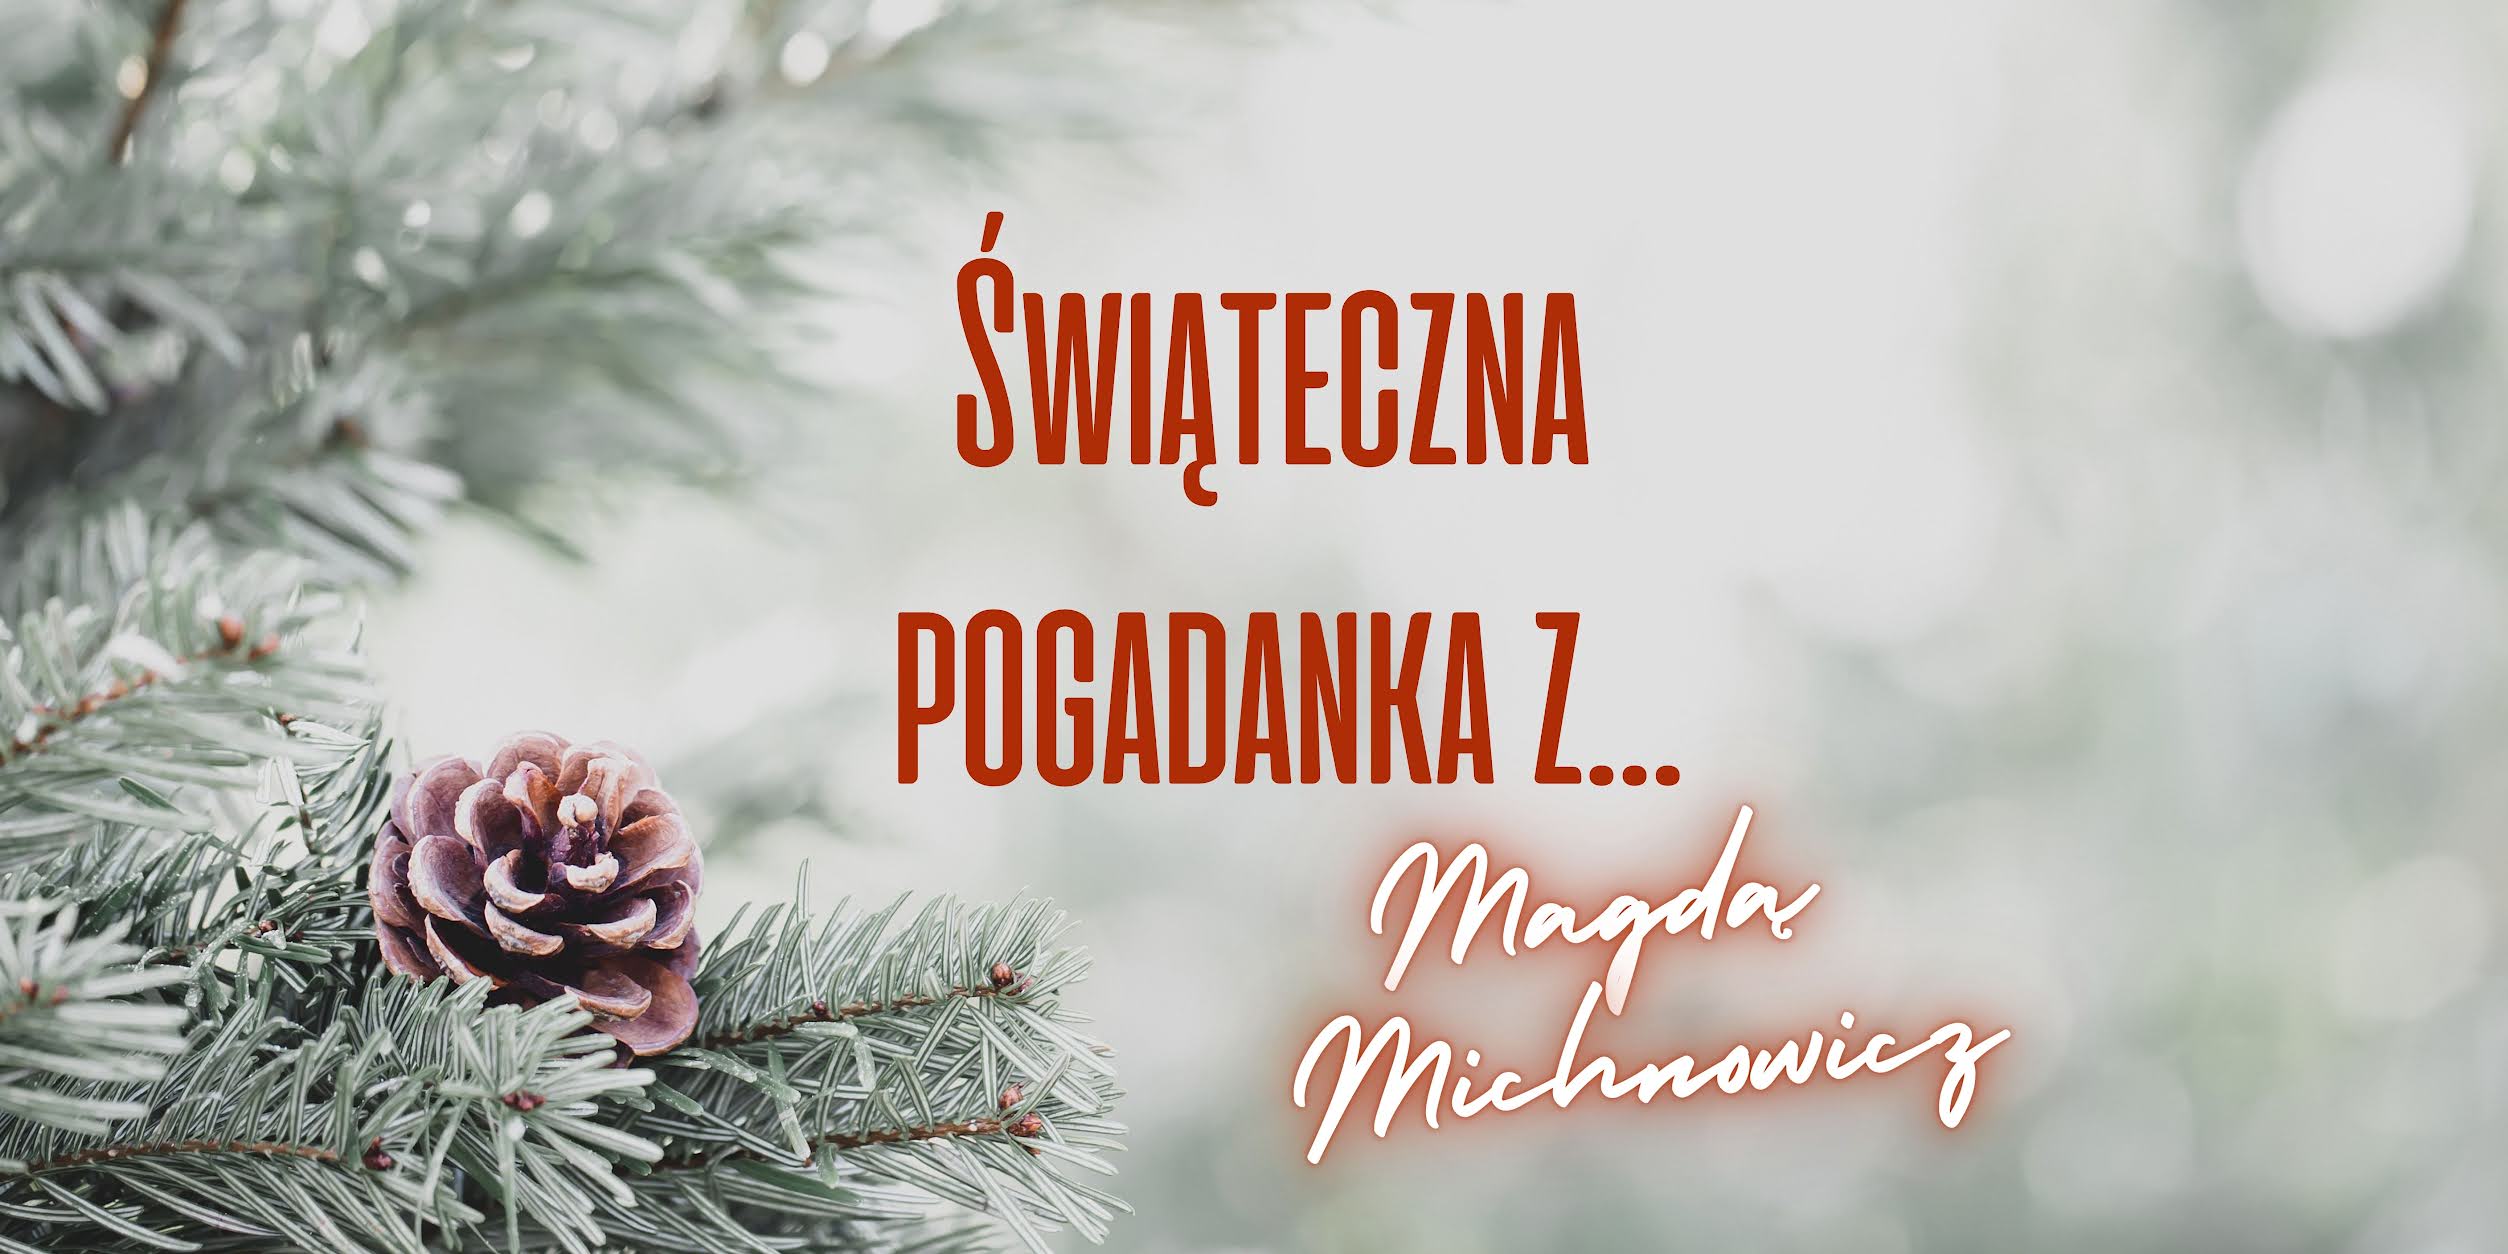 Magda Michnowicz, wywiad, fotografia, Mada